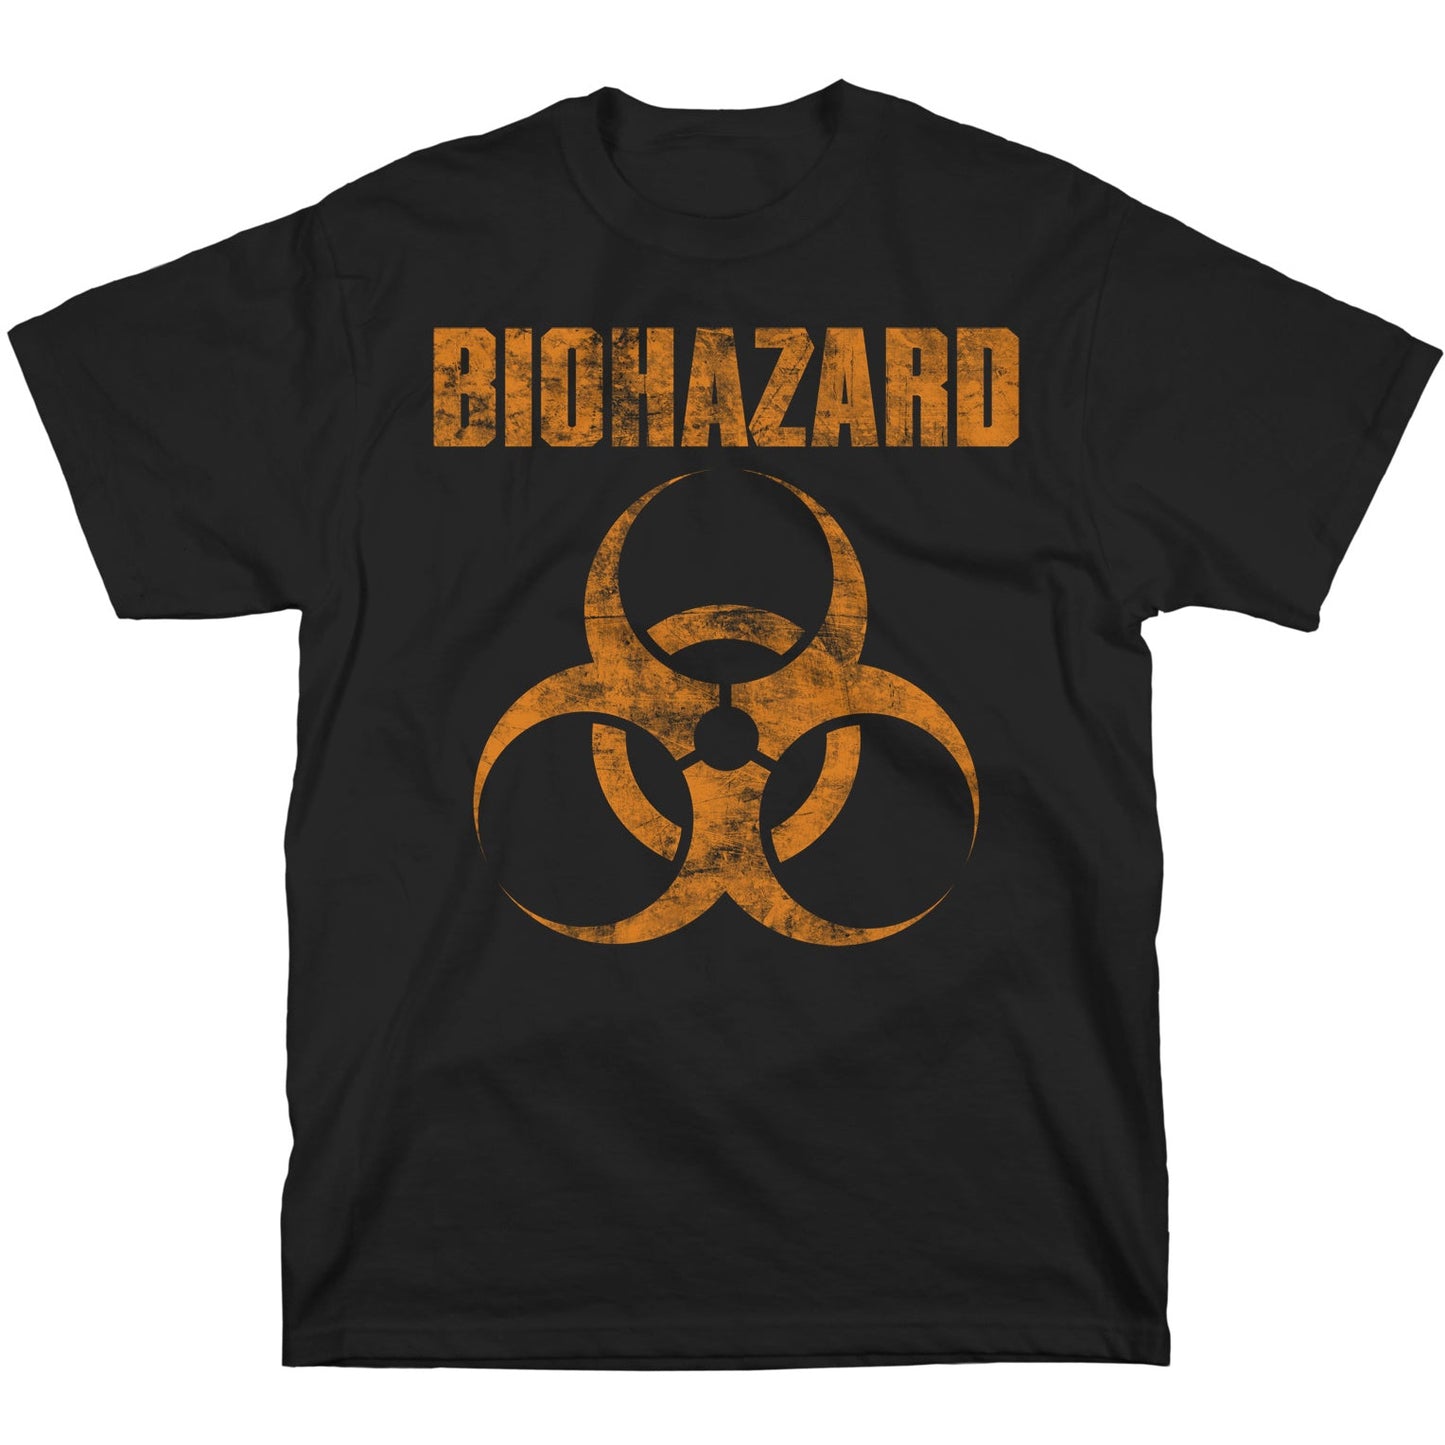 Biohazard - Distressed Logo T-Shirt - Black